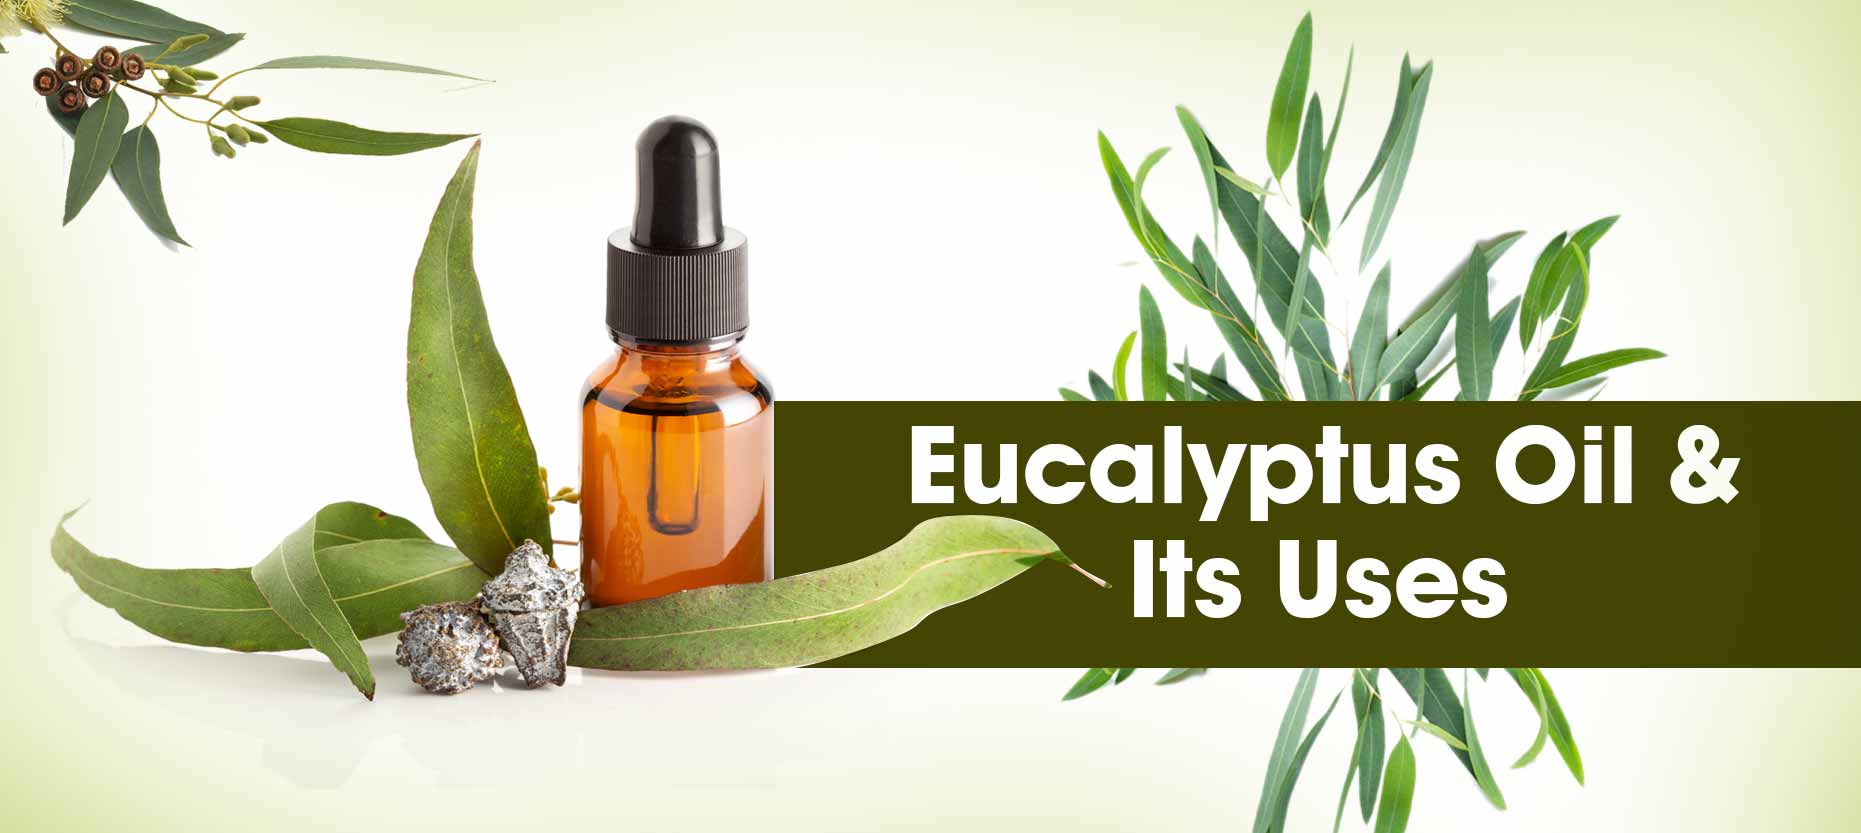 Eucalyptus Oil & Its Uses